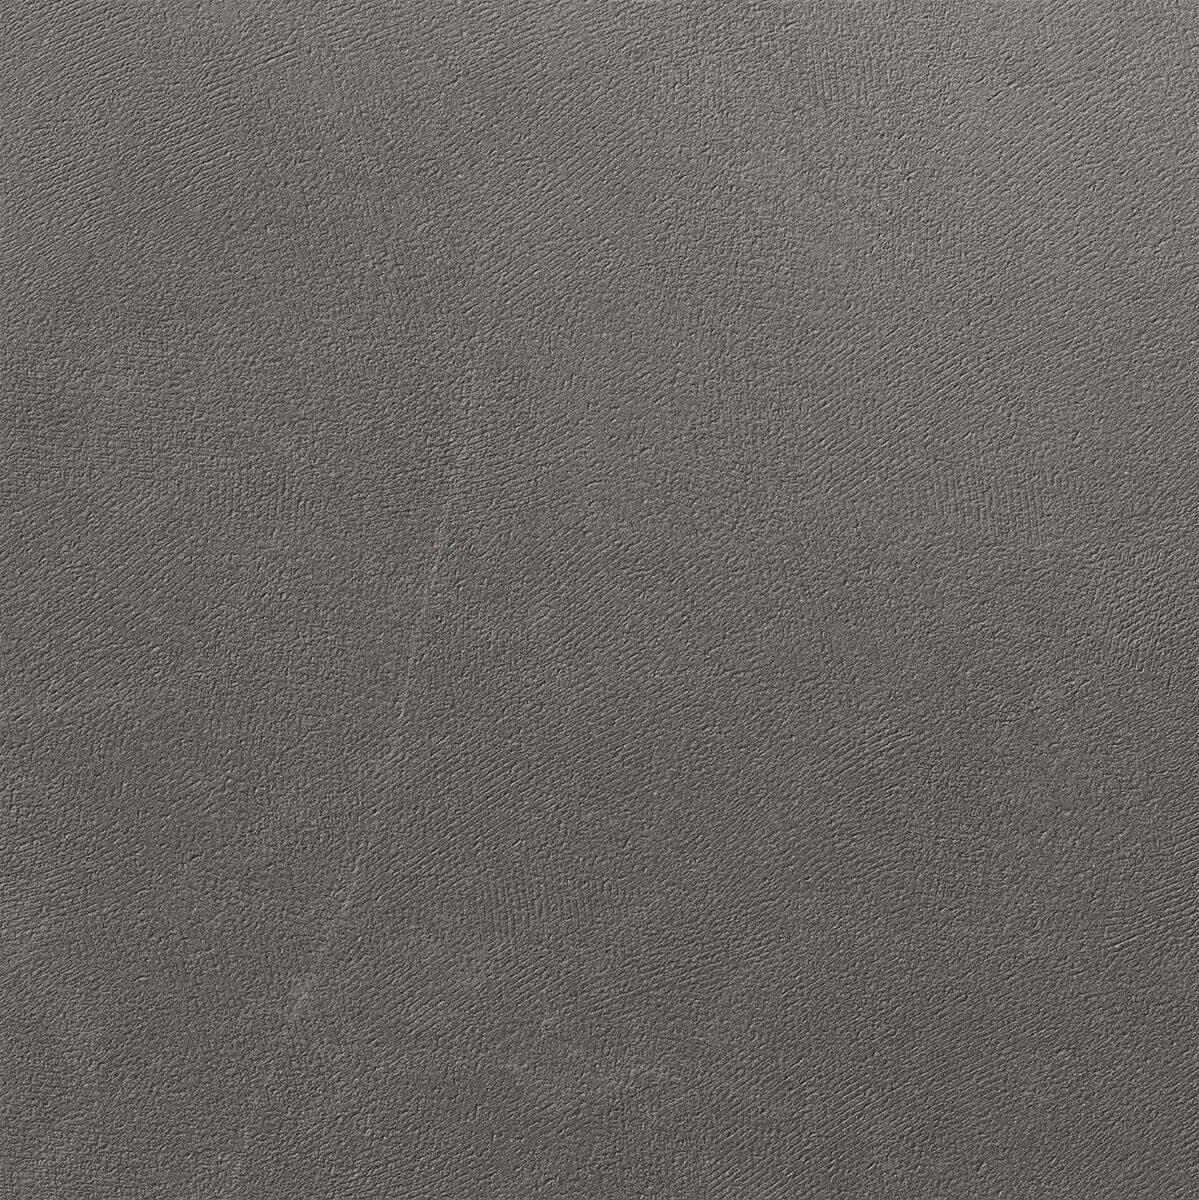 CONTACT - Carrelage Sol Antidérapant Effet pierre - Charcoal 60x60 - Réf.176112